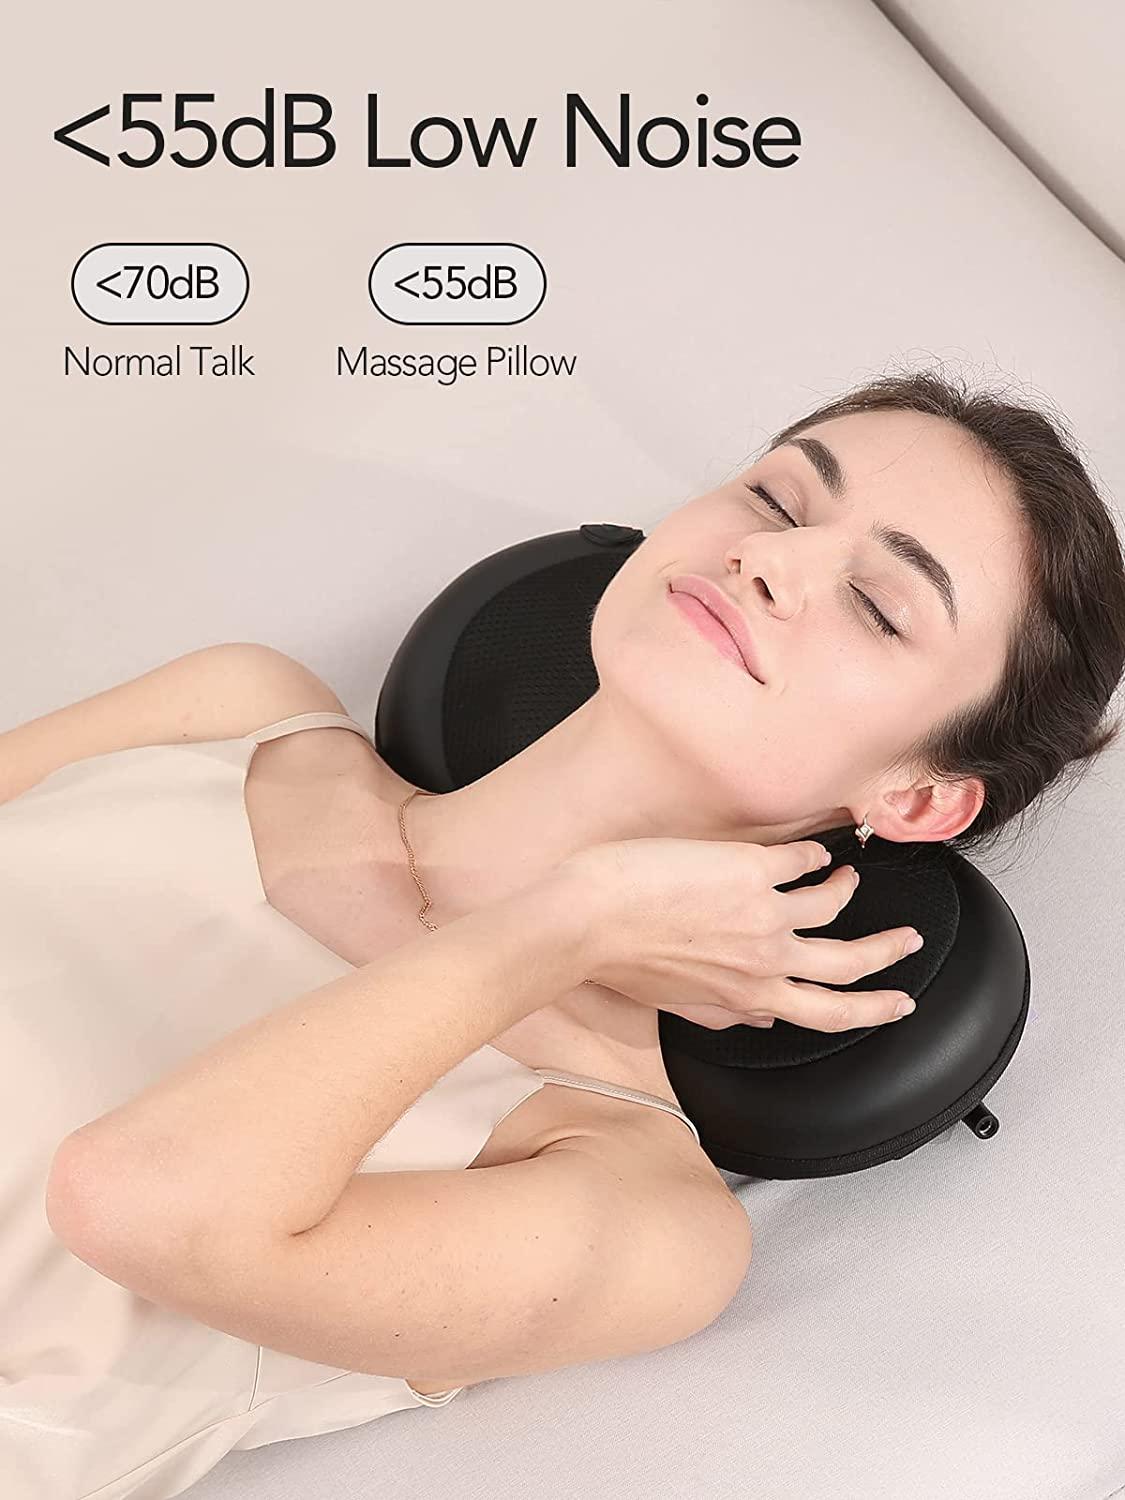 Careboda Shiatsu Neck and Back Massager with Soothing Heat, Electric  Shoulder Massage 8 Nodes Deep T…See more Careboda Shiatsu Neck and Back  Massager